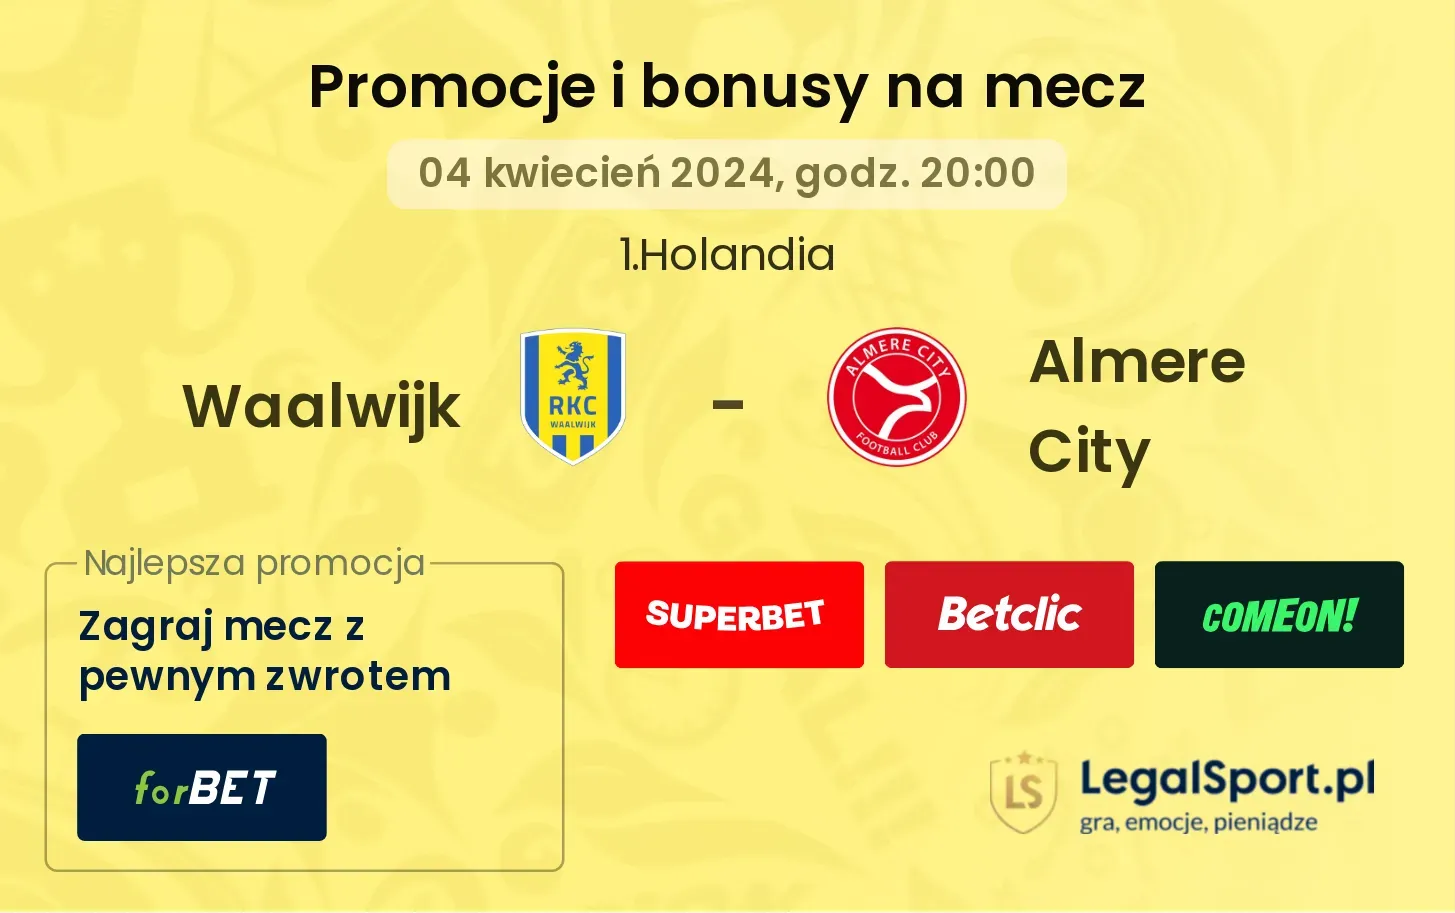 Waalwijk - Almere City promocje bonusy na mecz